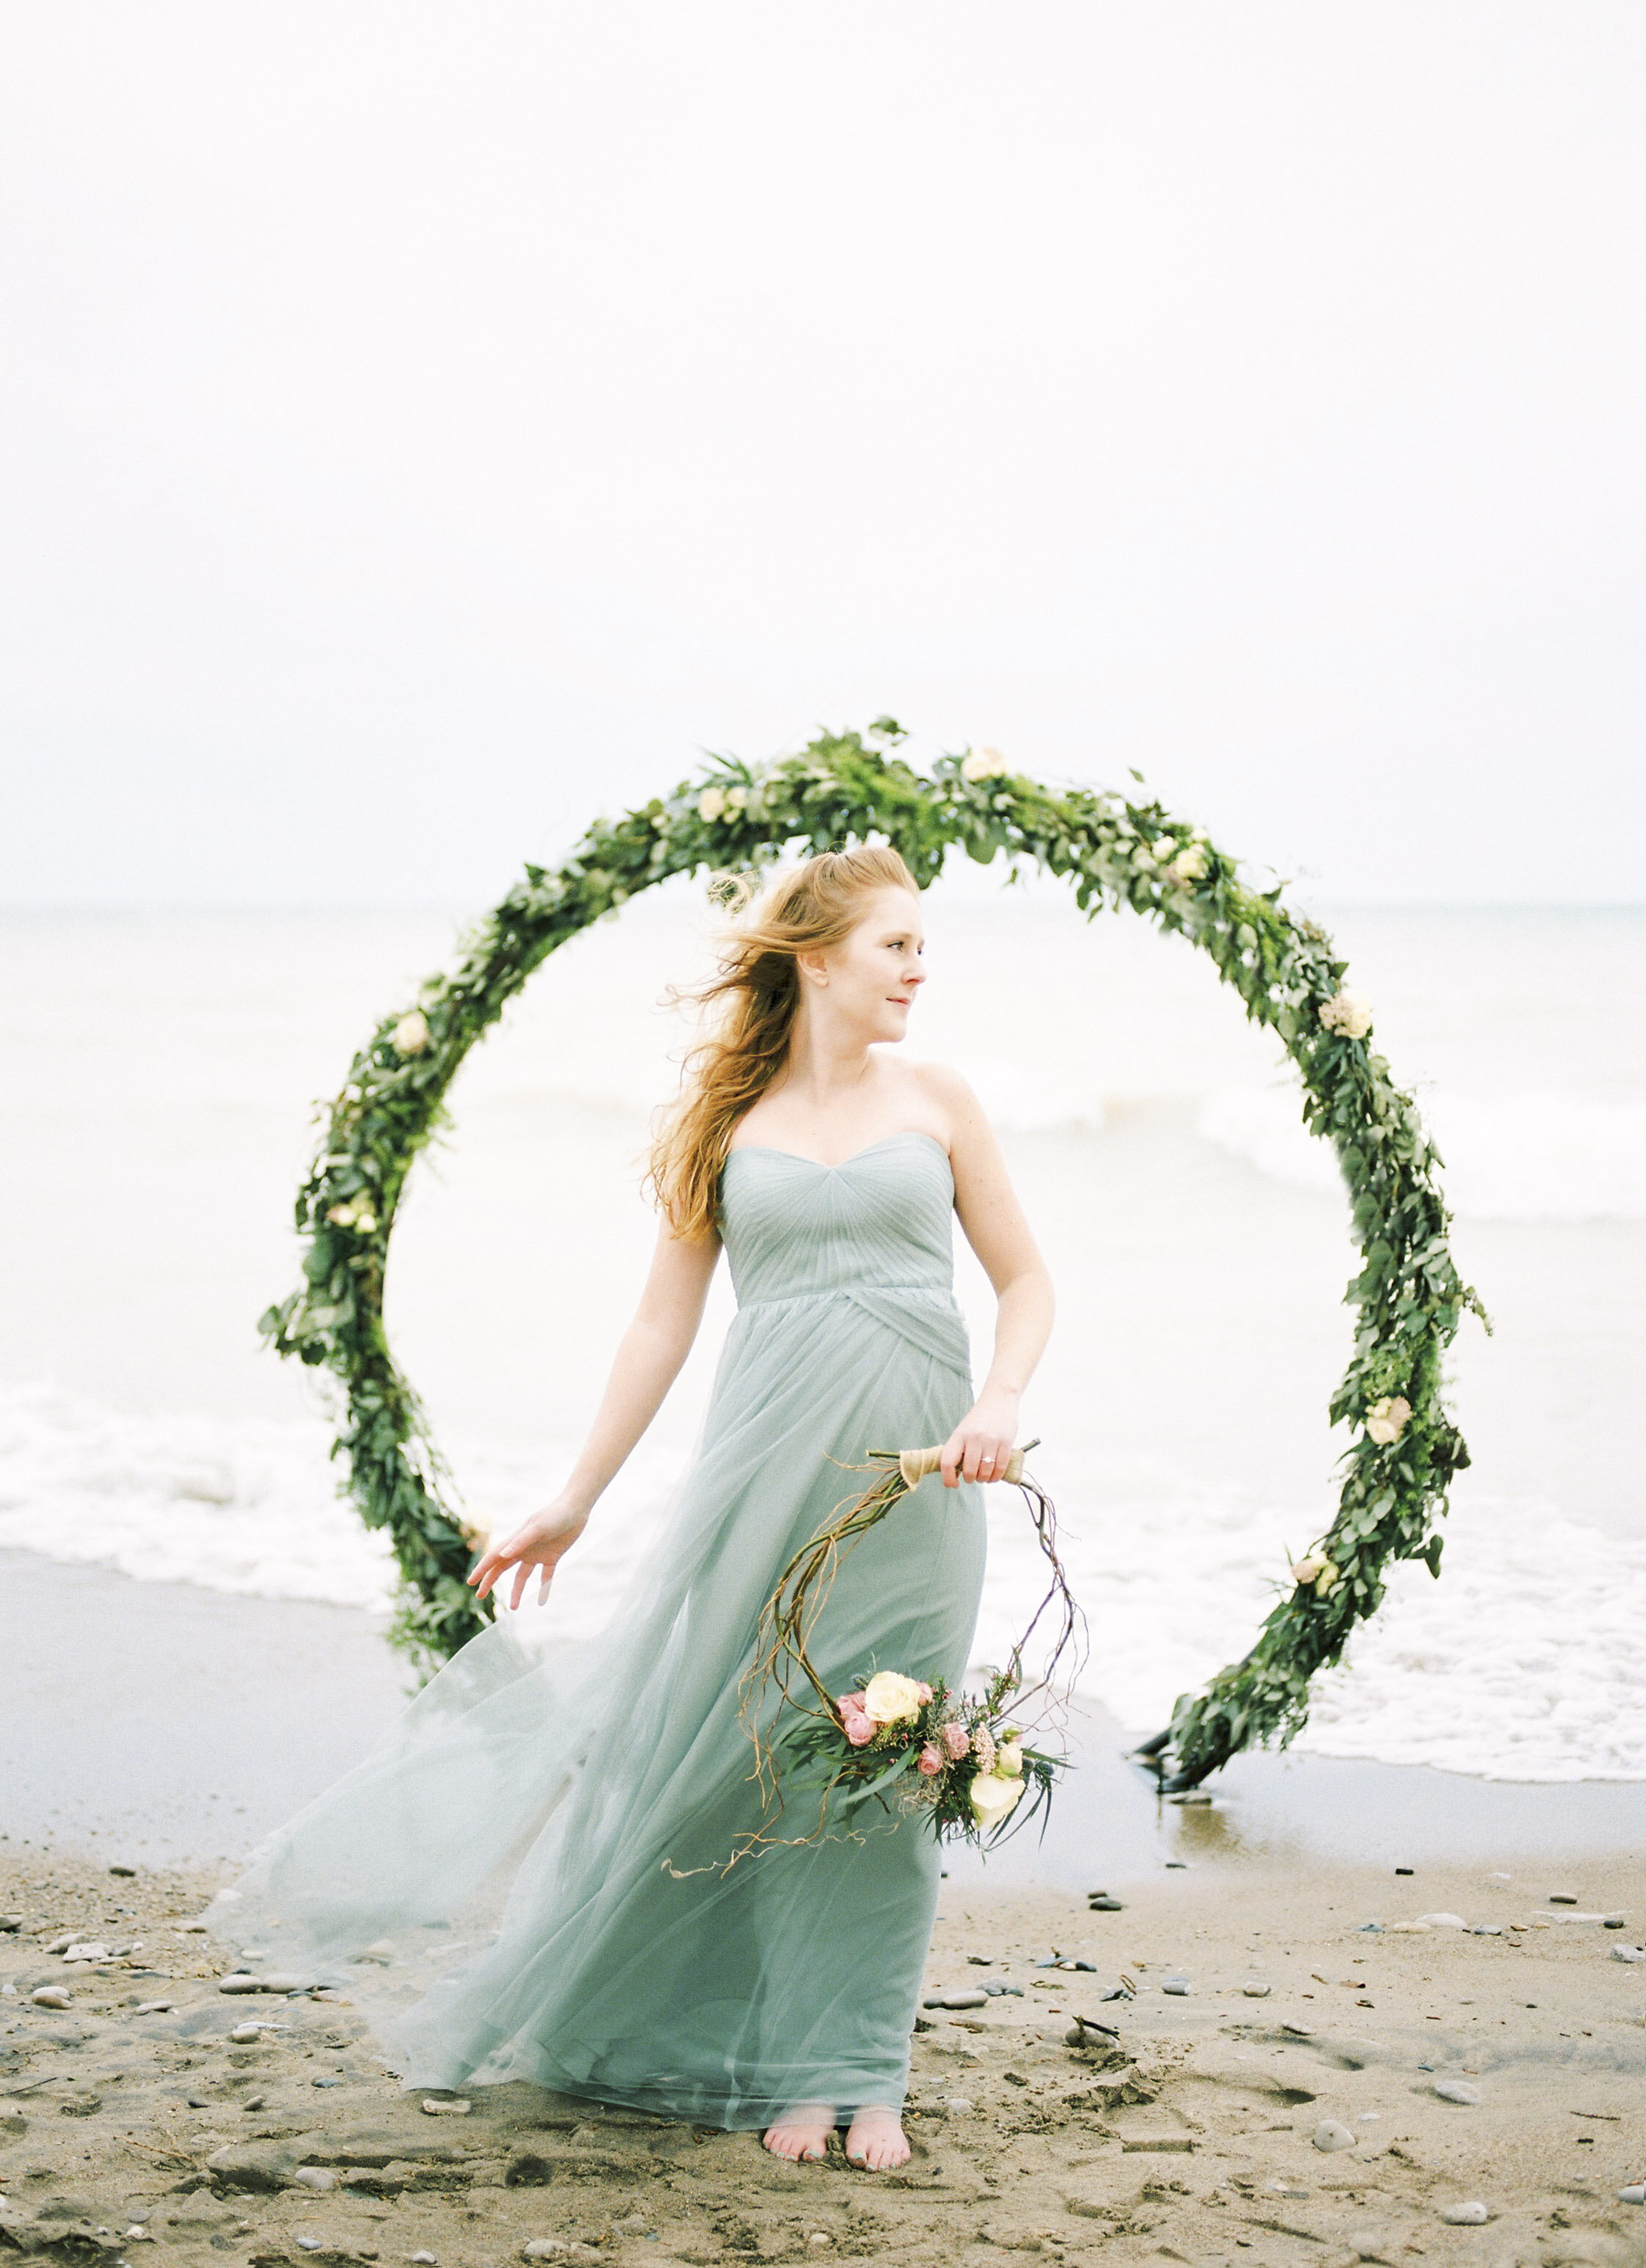 Huron County Elopement & Wedding Photographer | Heather Dietz Photography